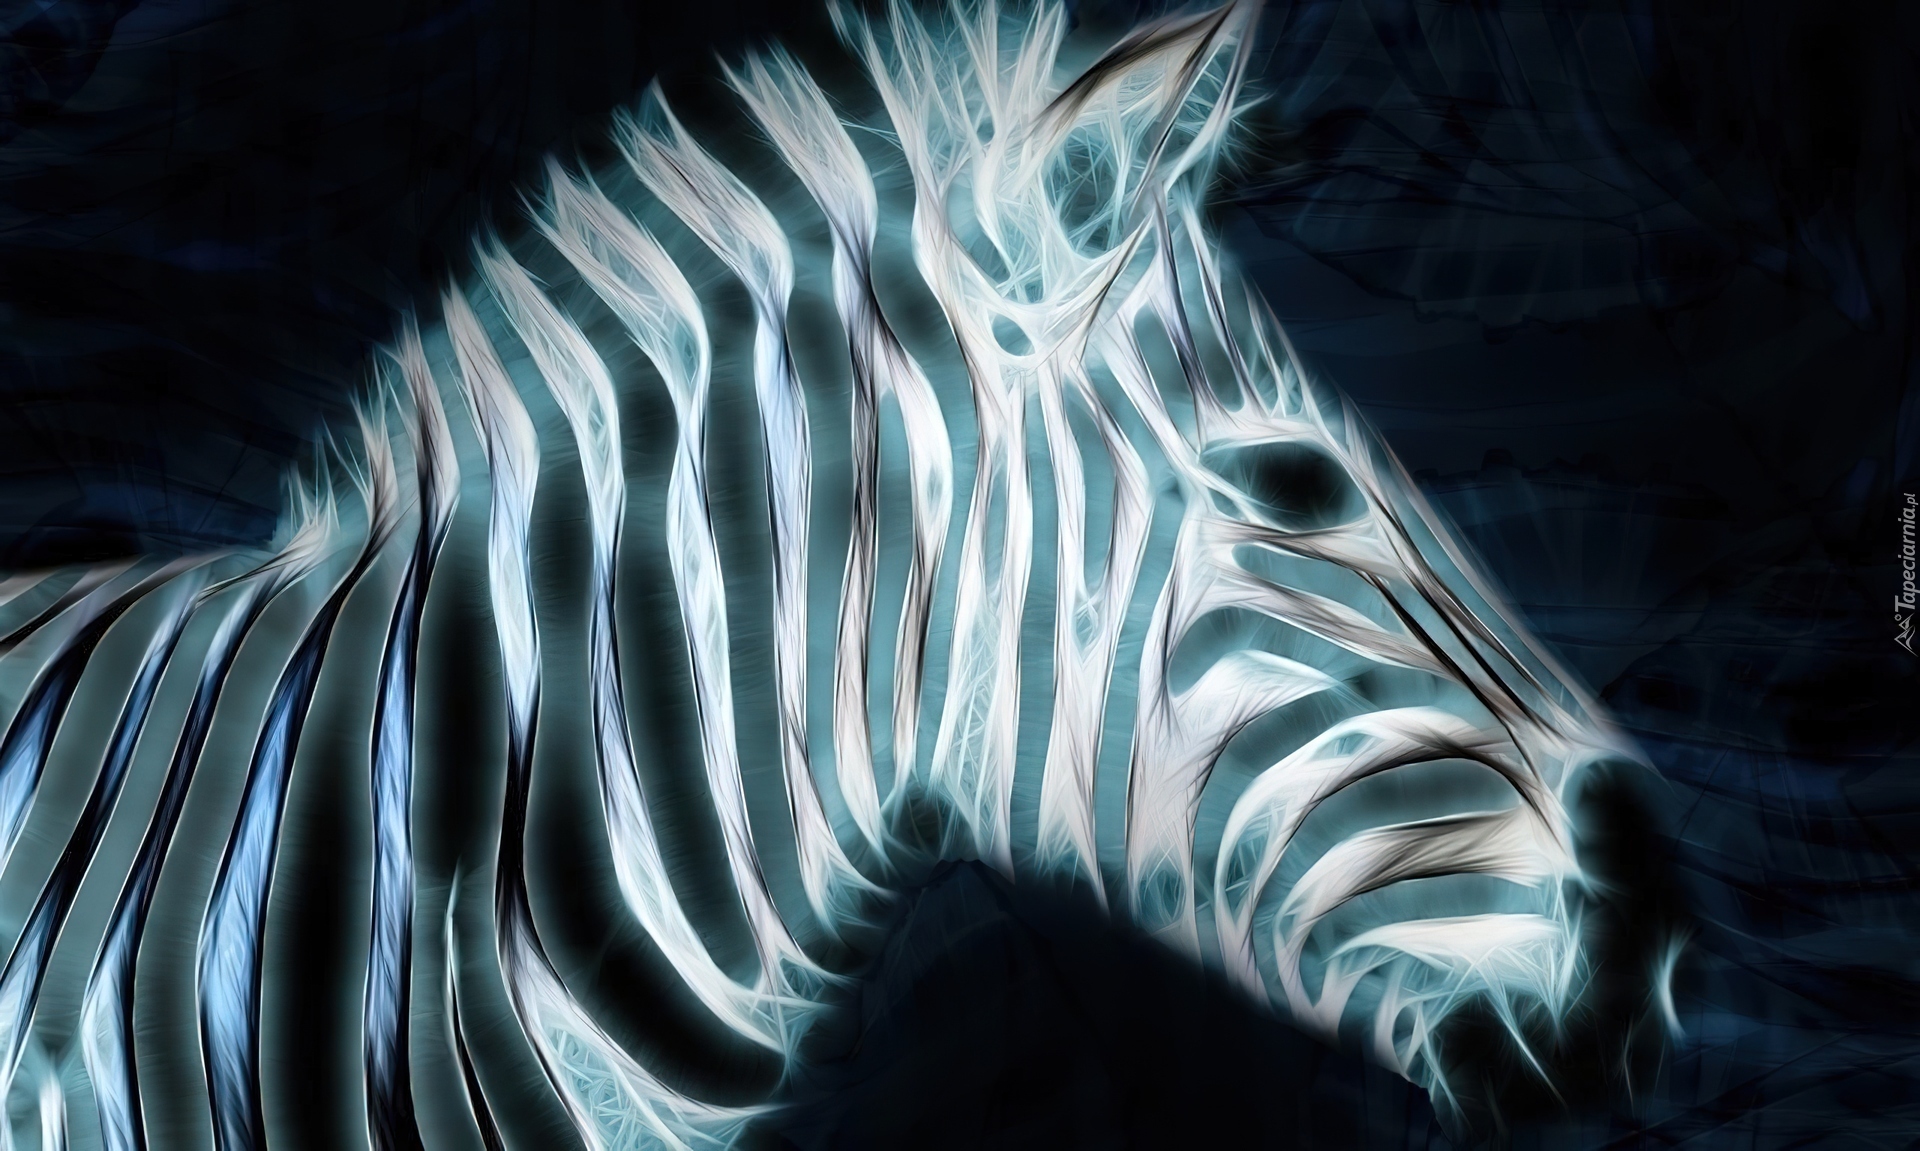 Zebra, 3D, Paski